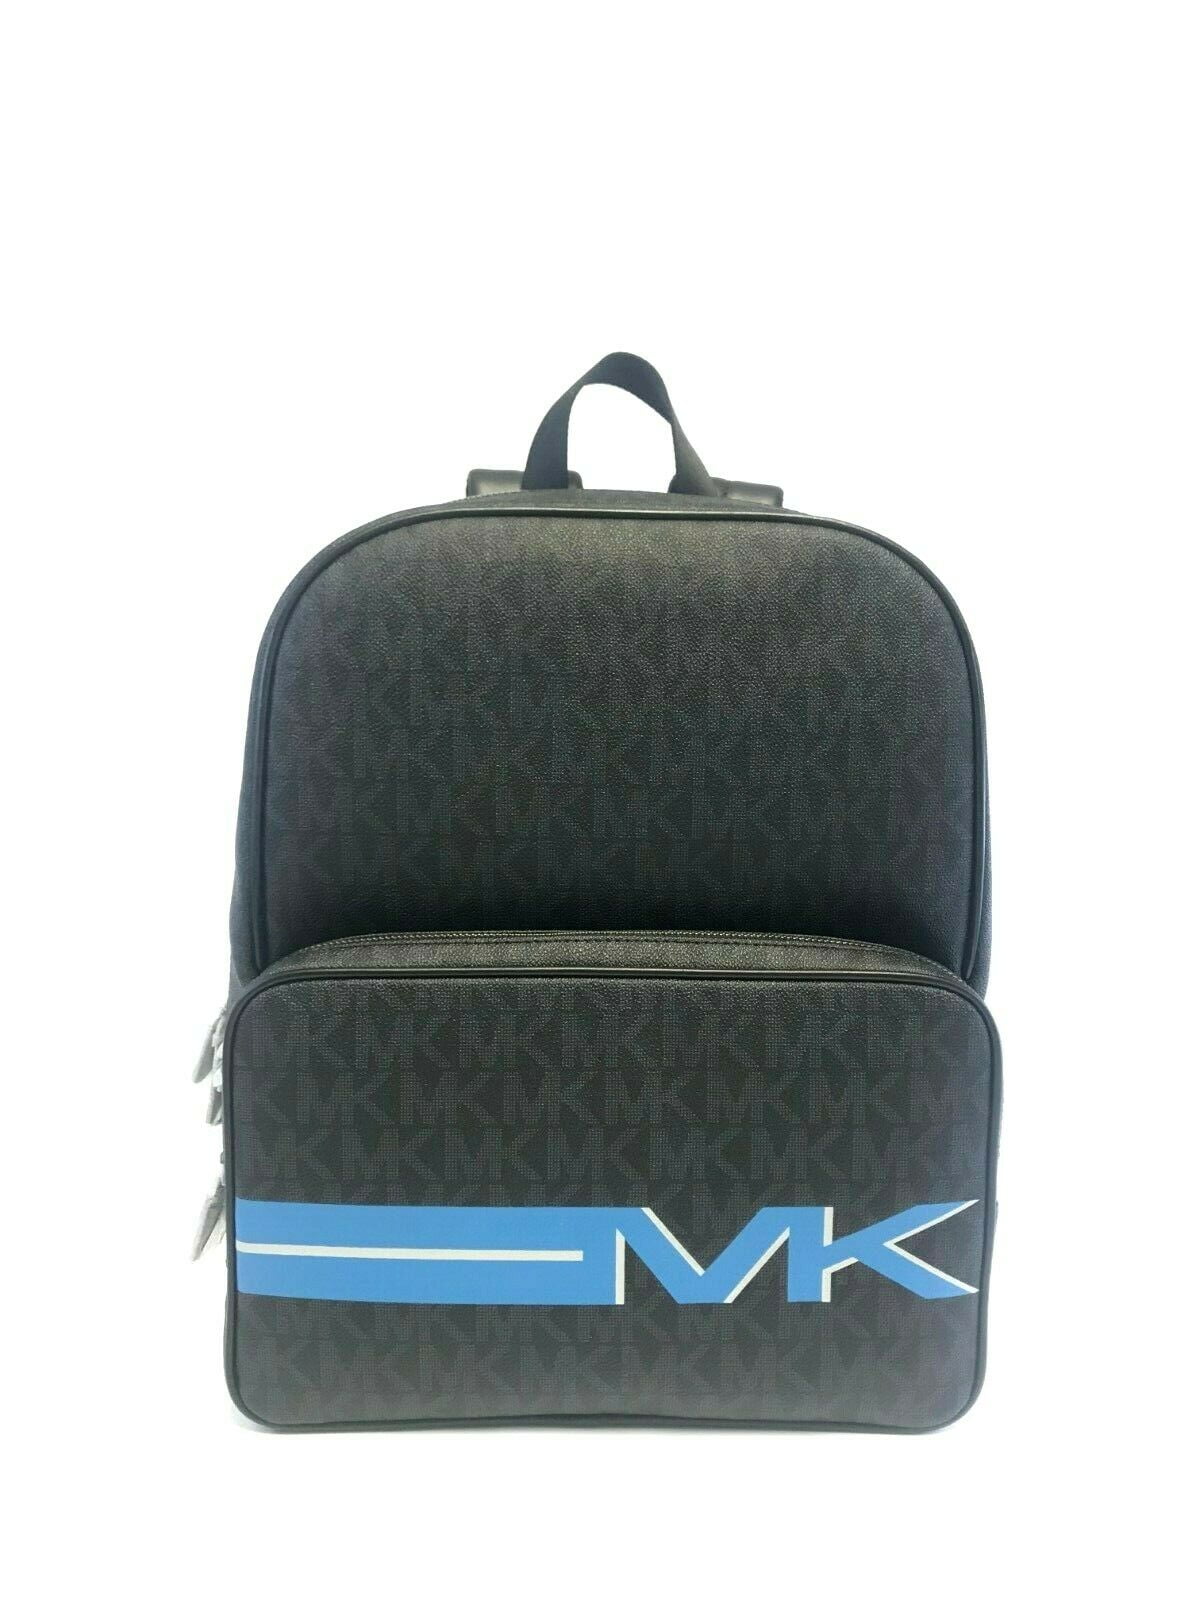 michael kors mens jet set logo backpack